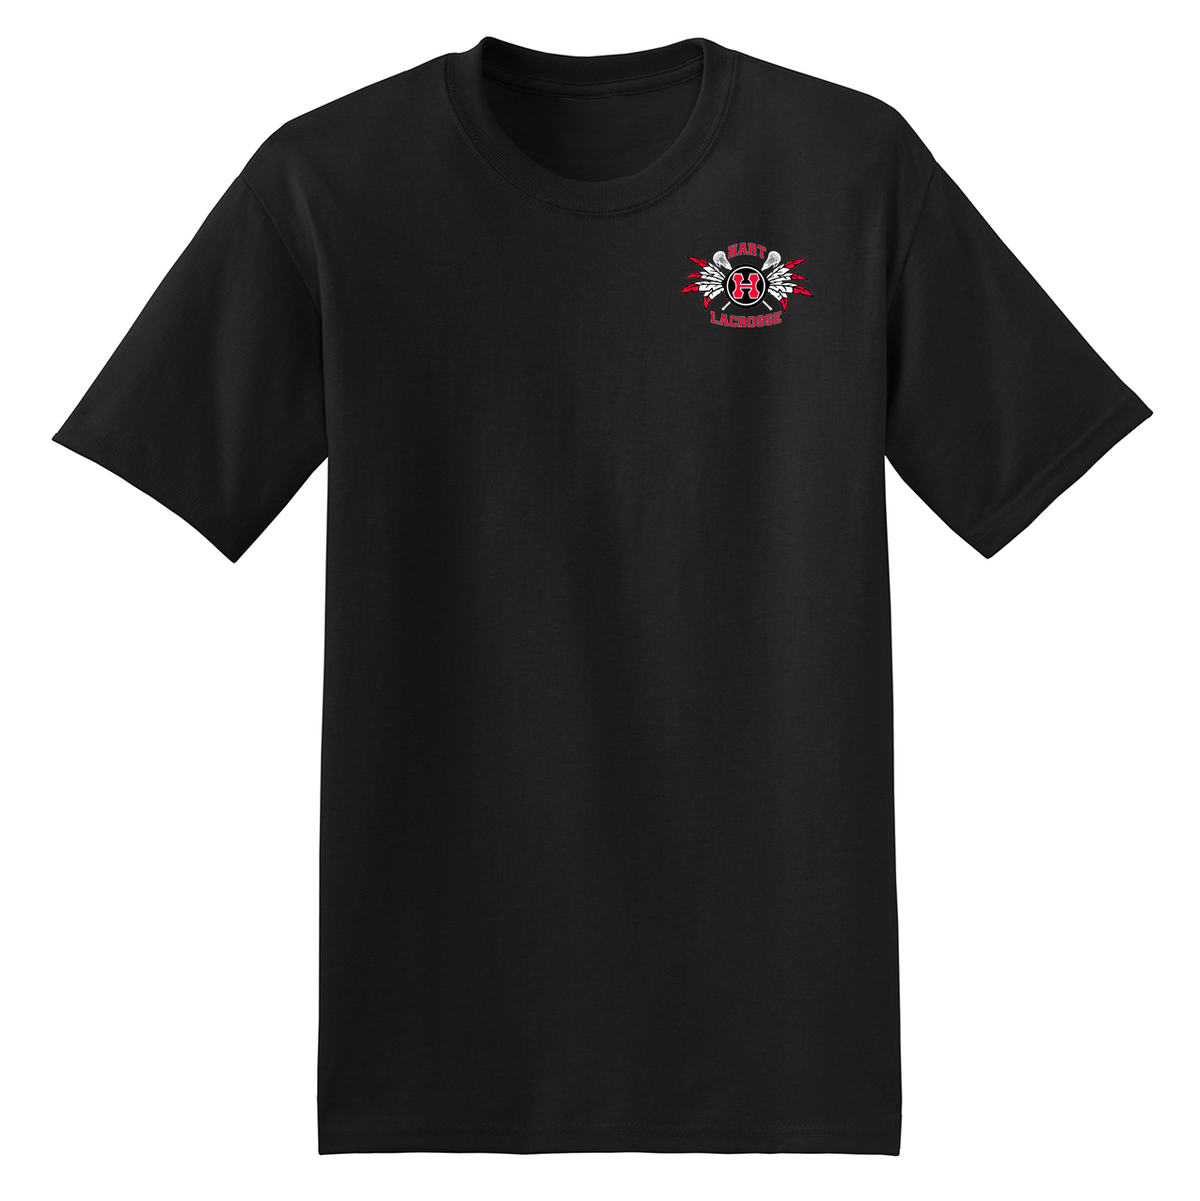 Hart High School Lacrosse T-Shirt